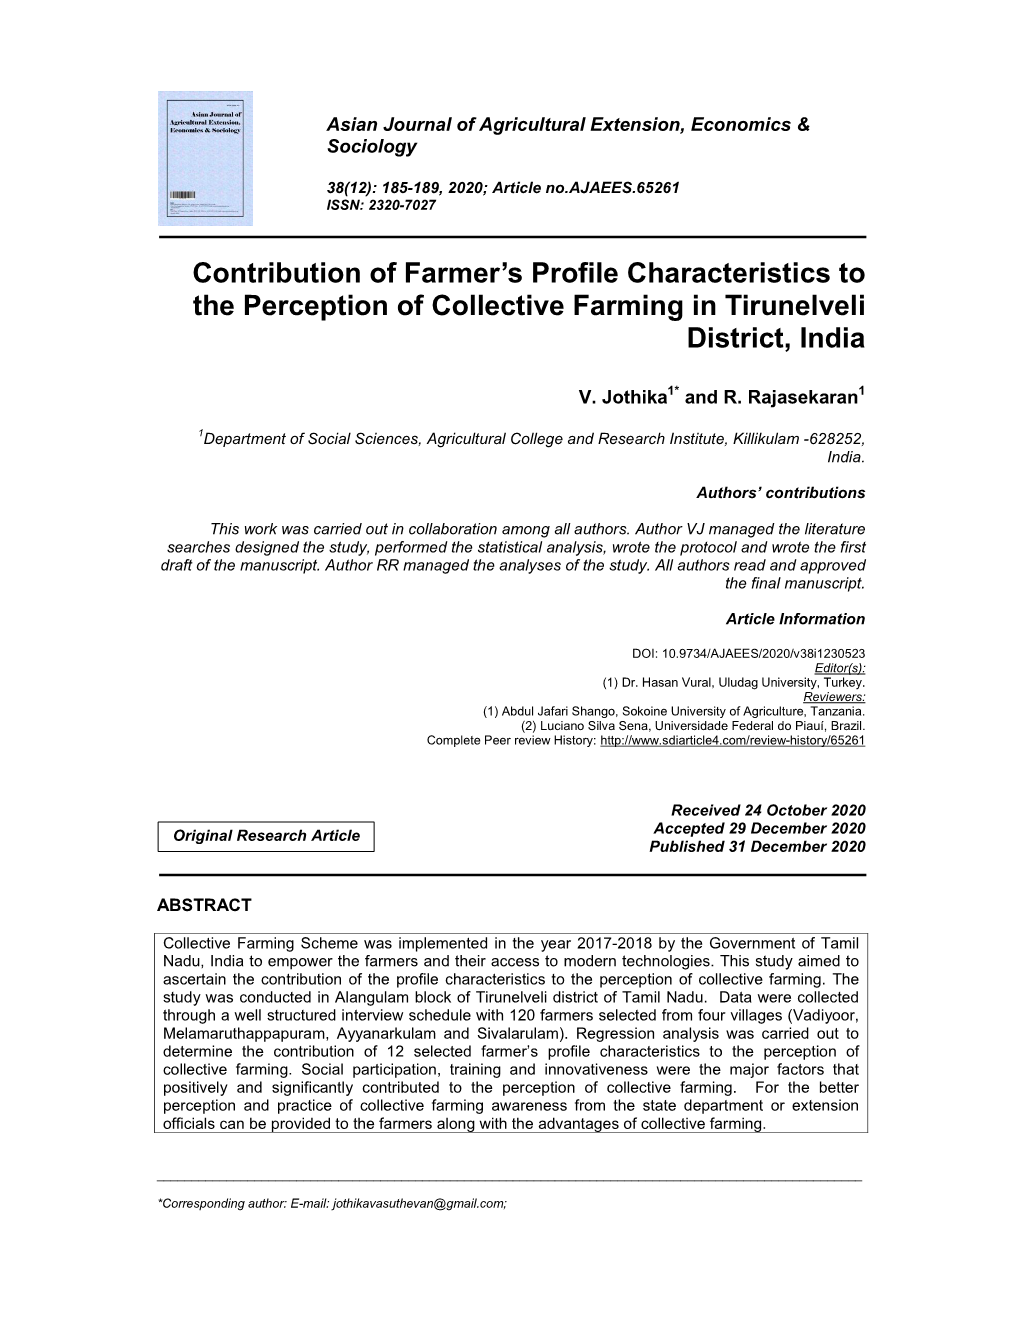 Contribution of Farmer's Profile Characteristics to the Perception Of